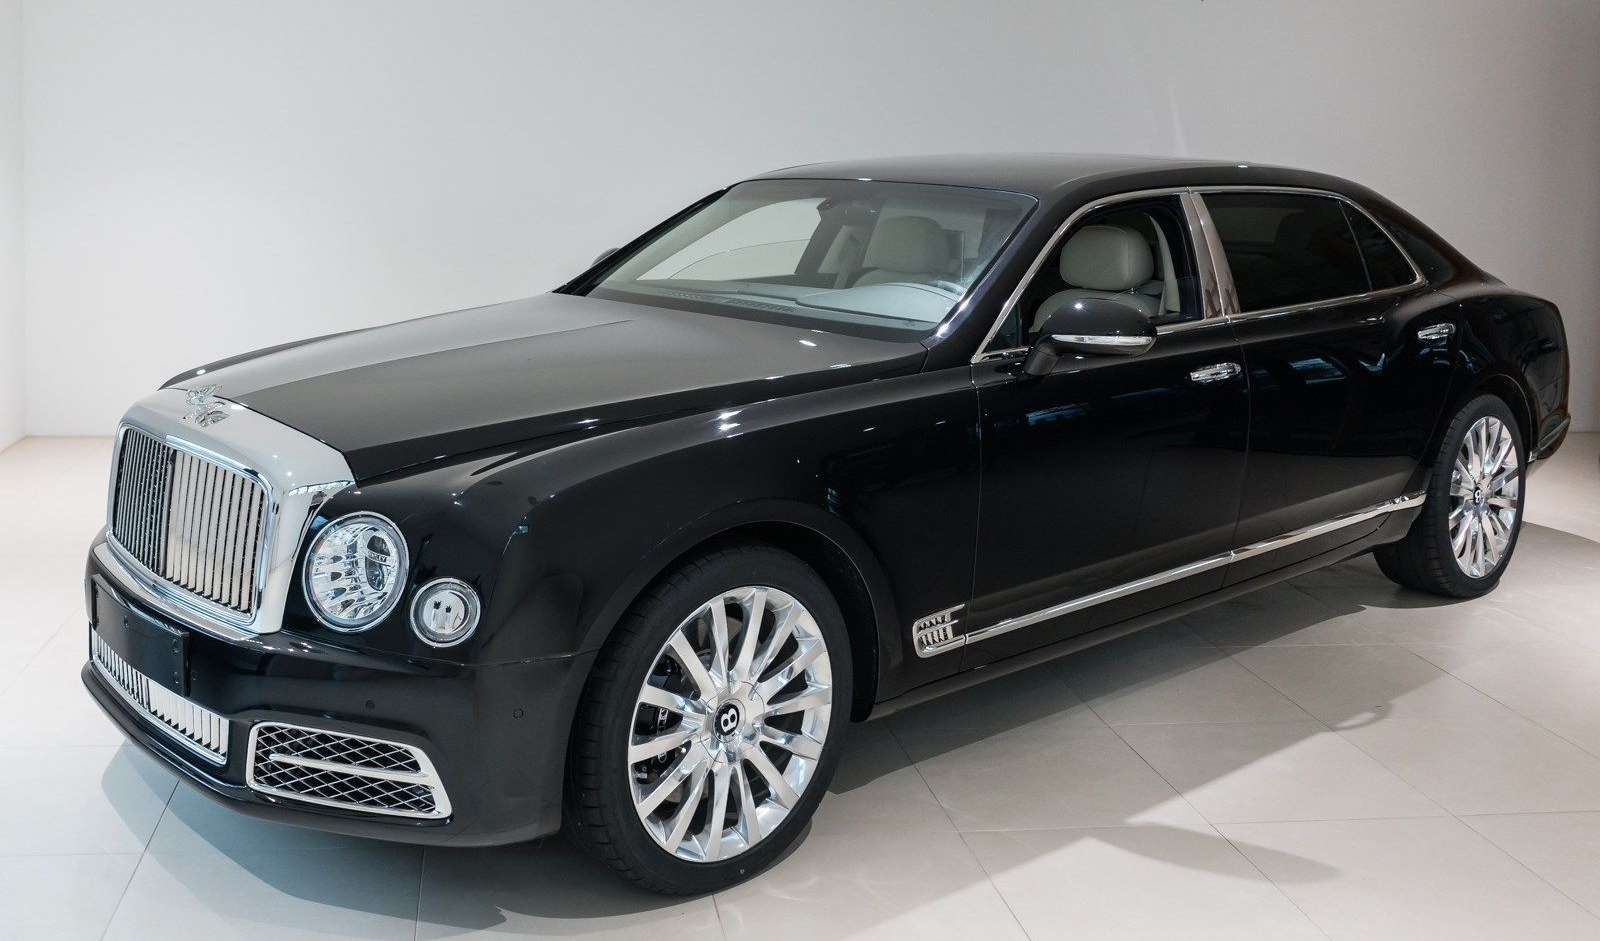 Bentley Mulsanne Extended Wheelbase Luxury Pulse Cars